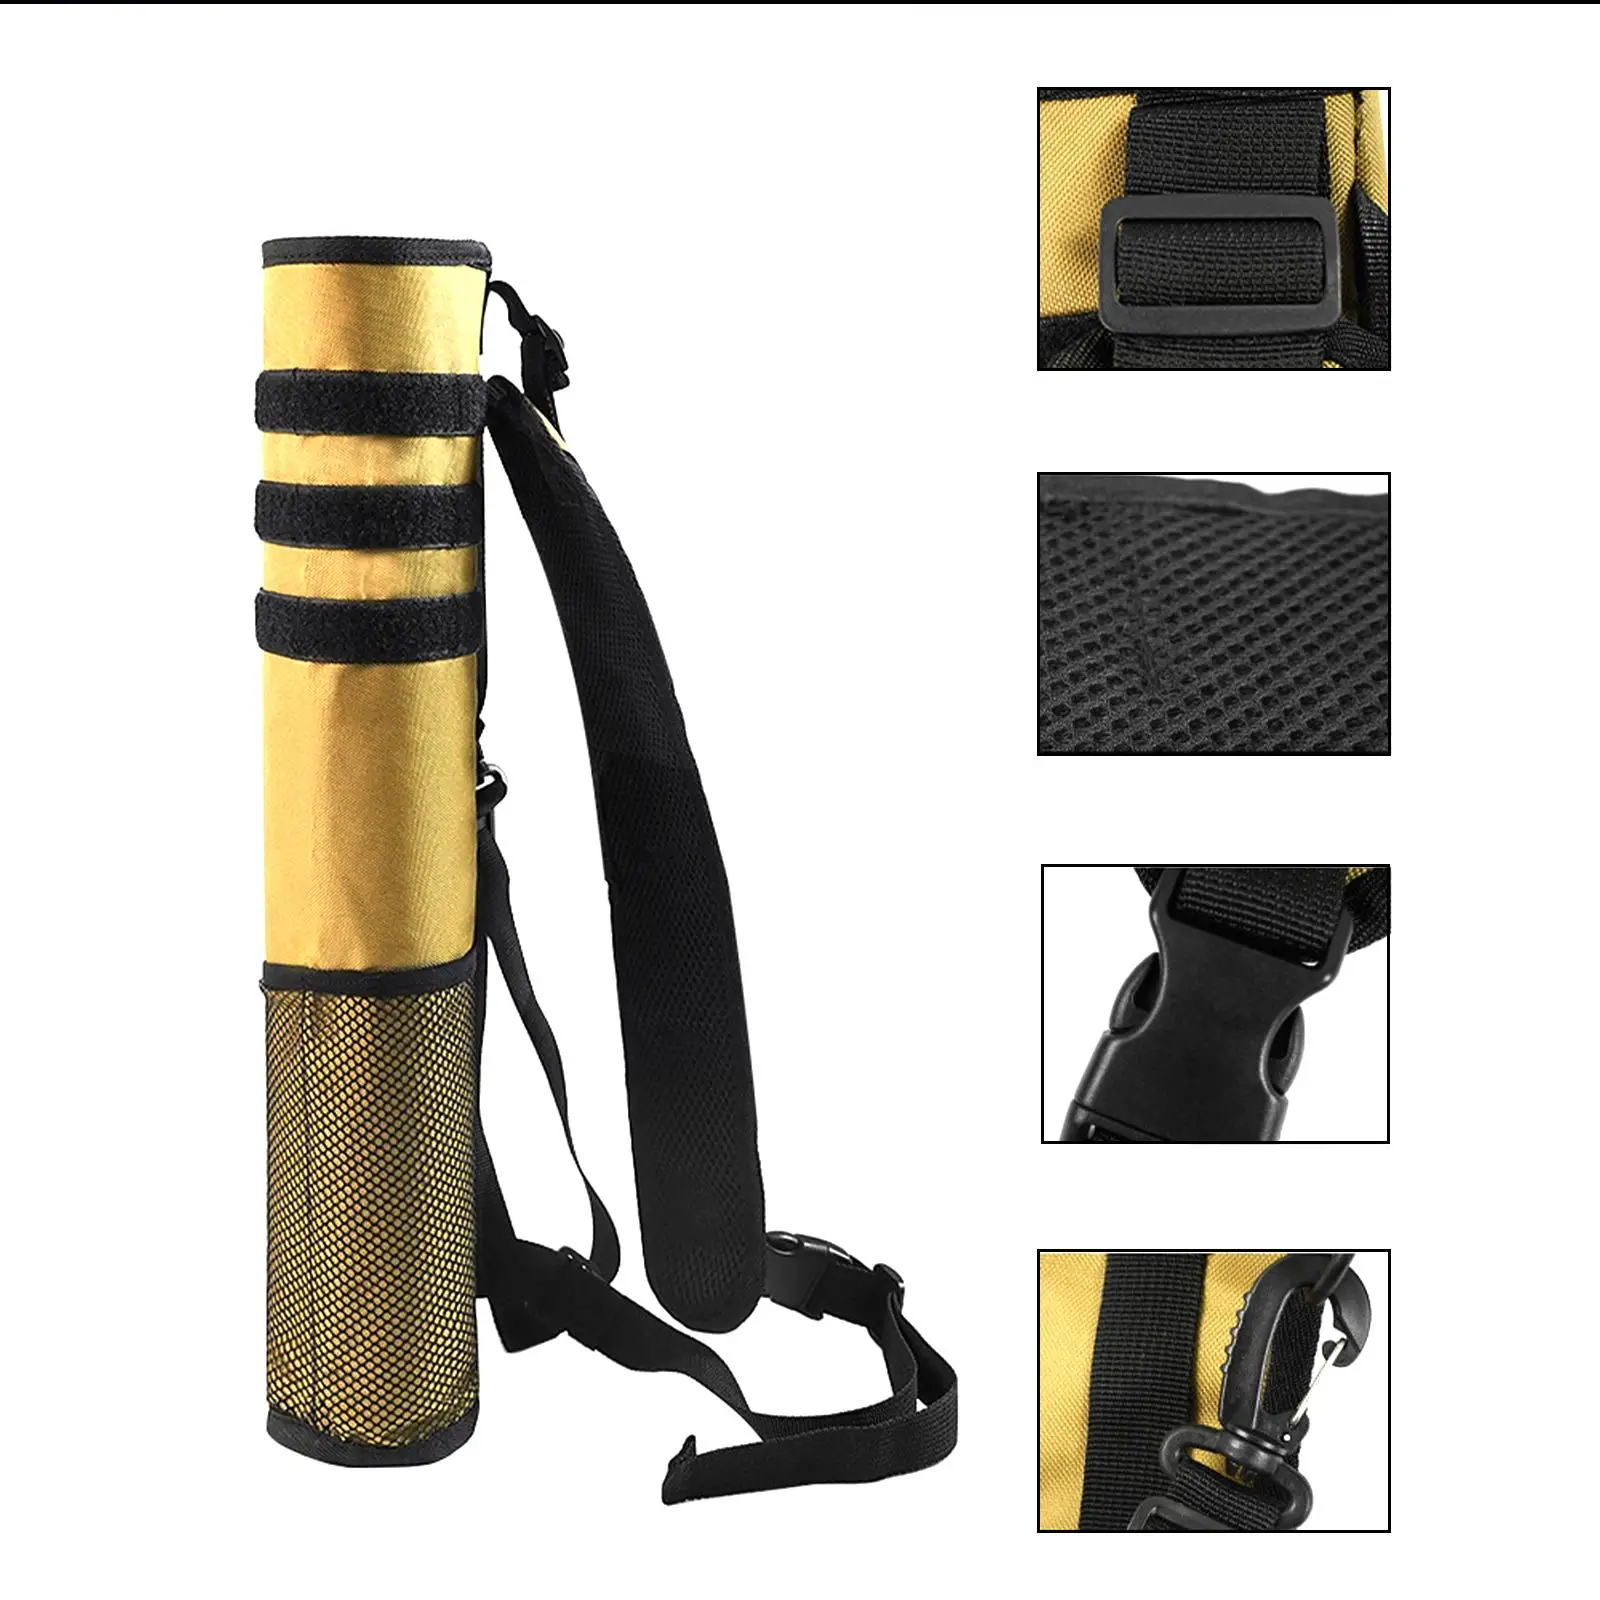 Archery Arrow Storage Holder Protective Bag Oxford Cloth Wear-resistant